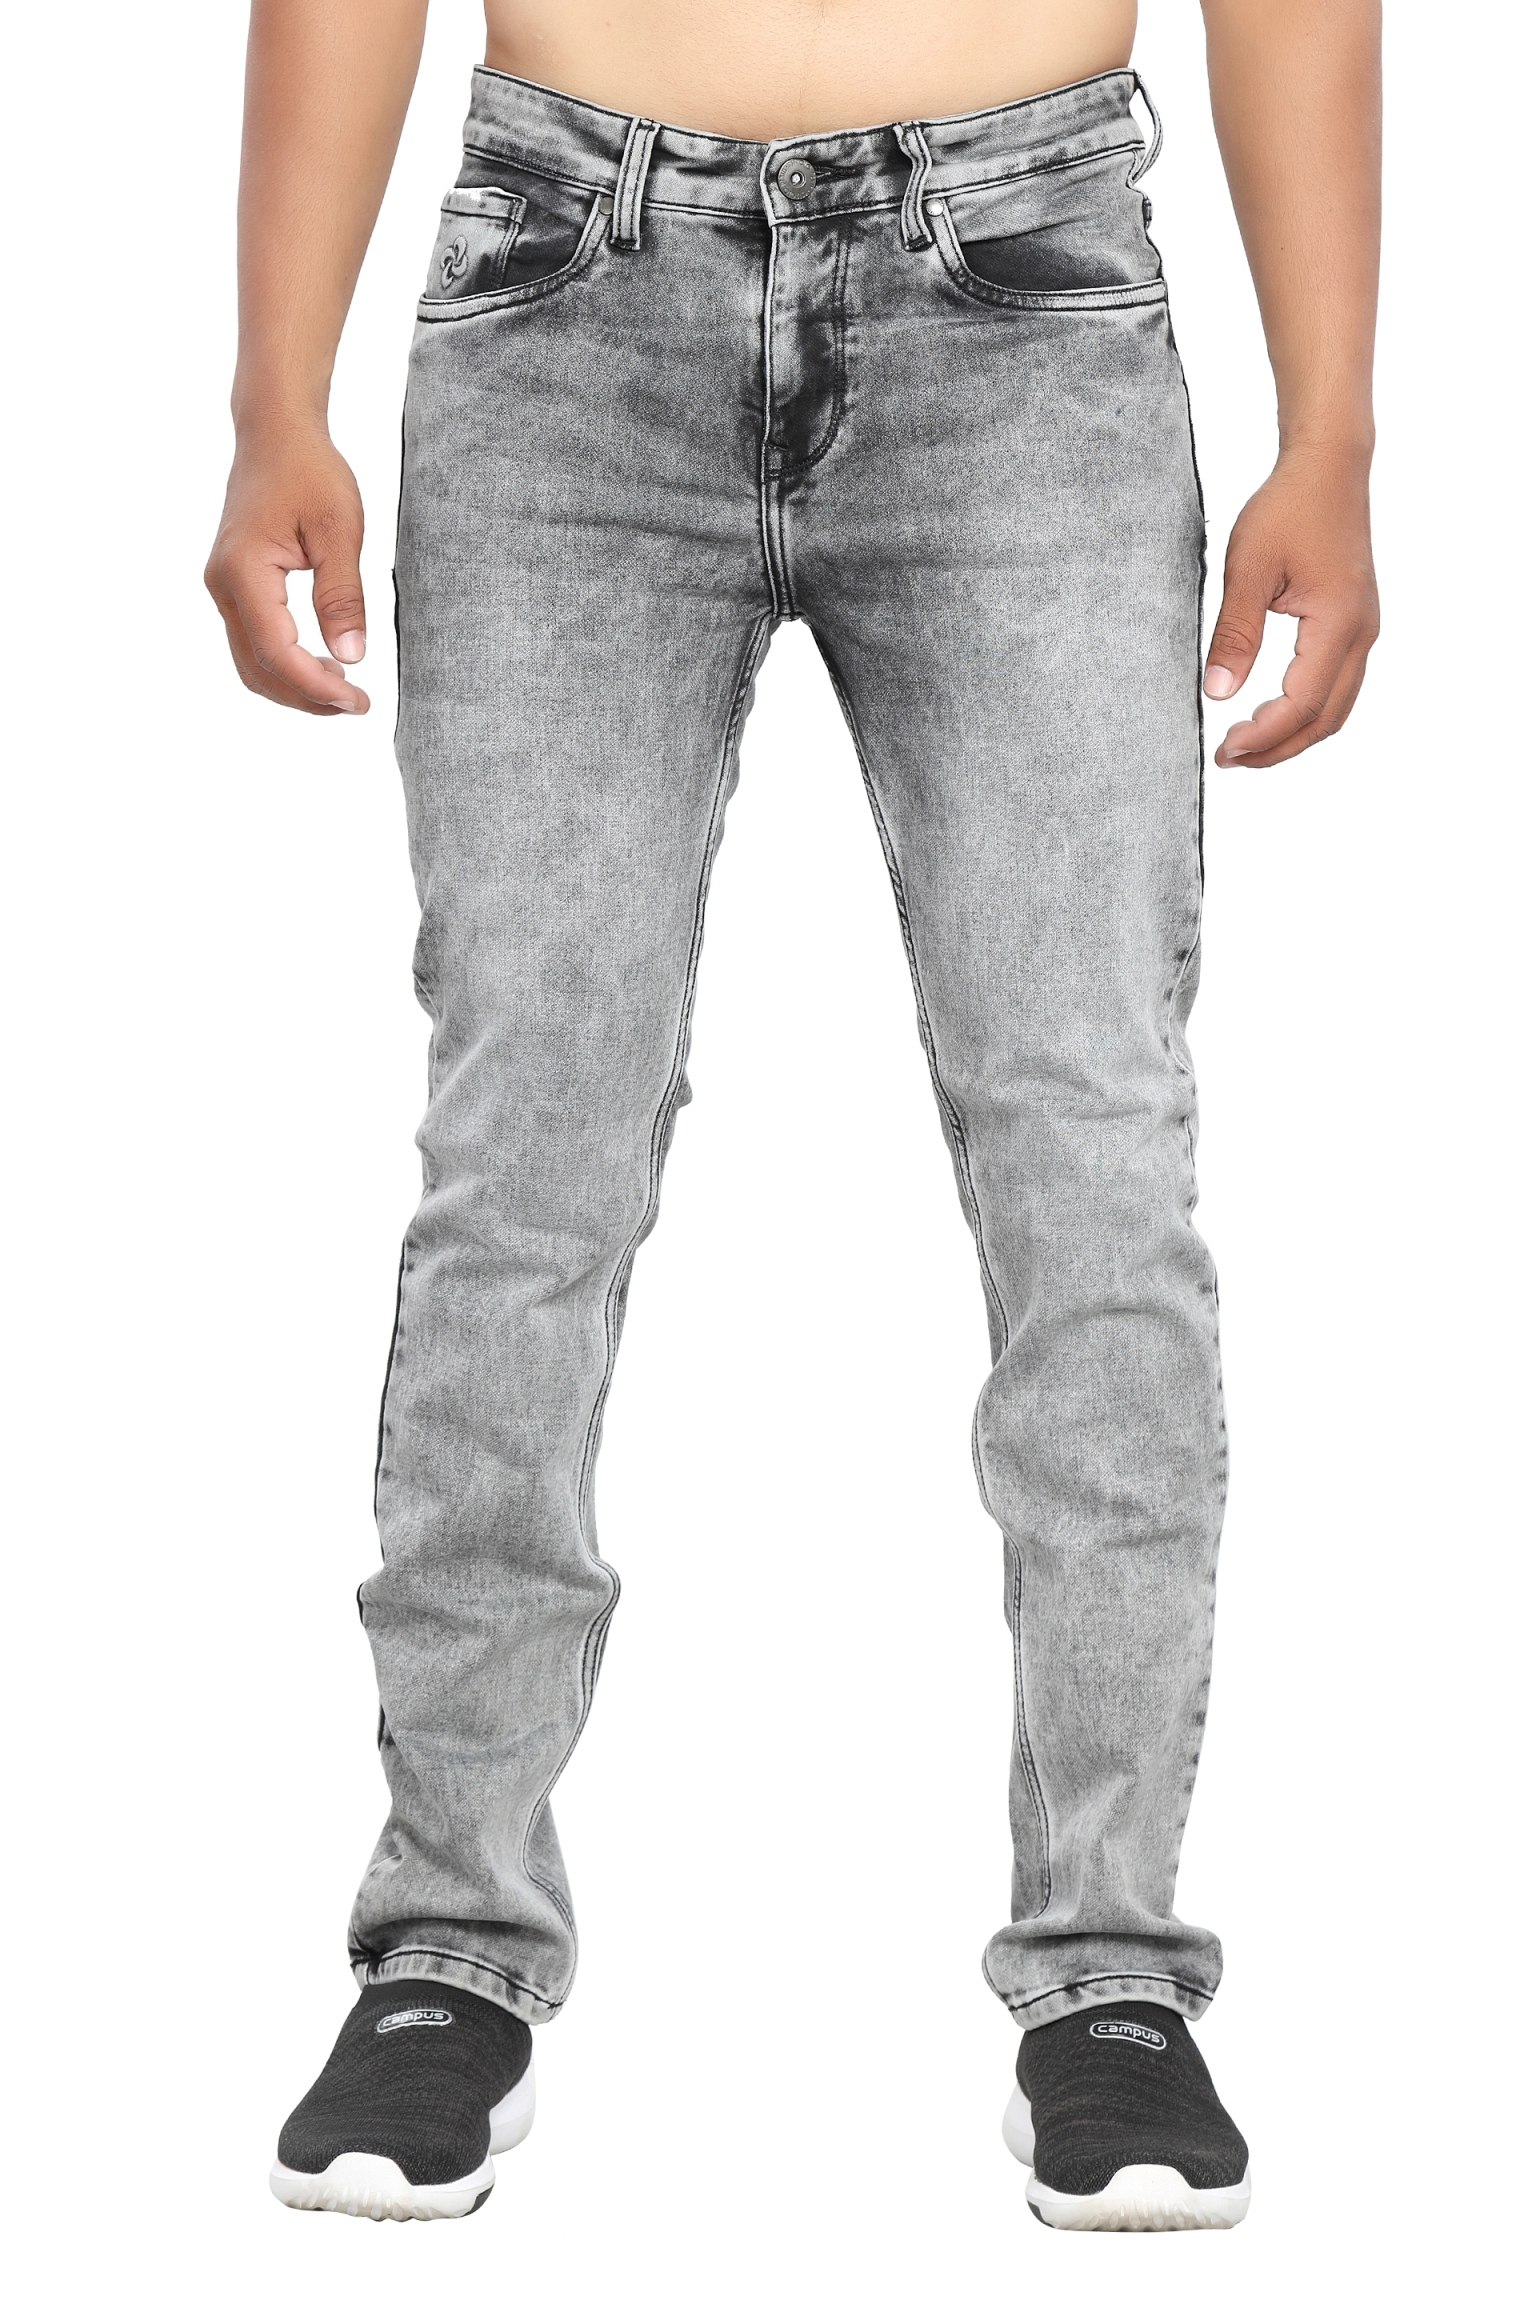 Estrolo Stretchable Slim-Fit Grey Jeans for Men